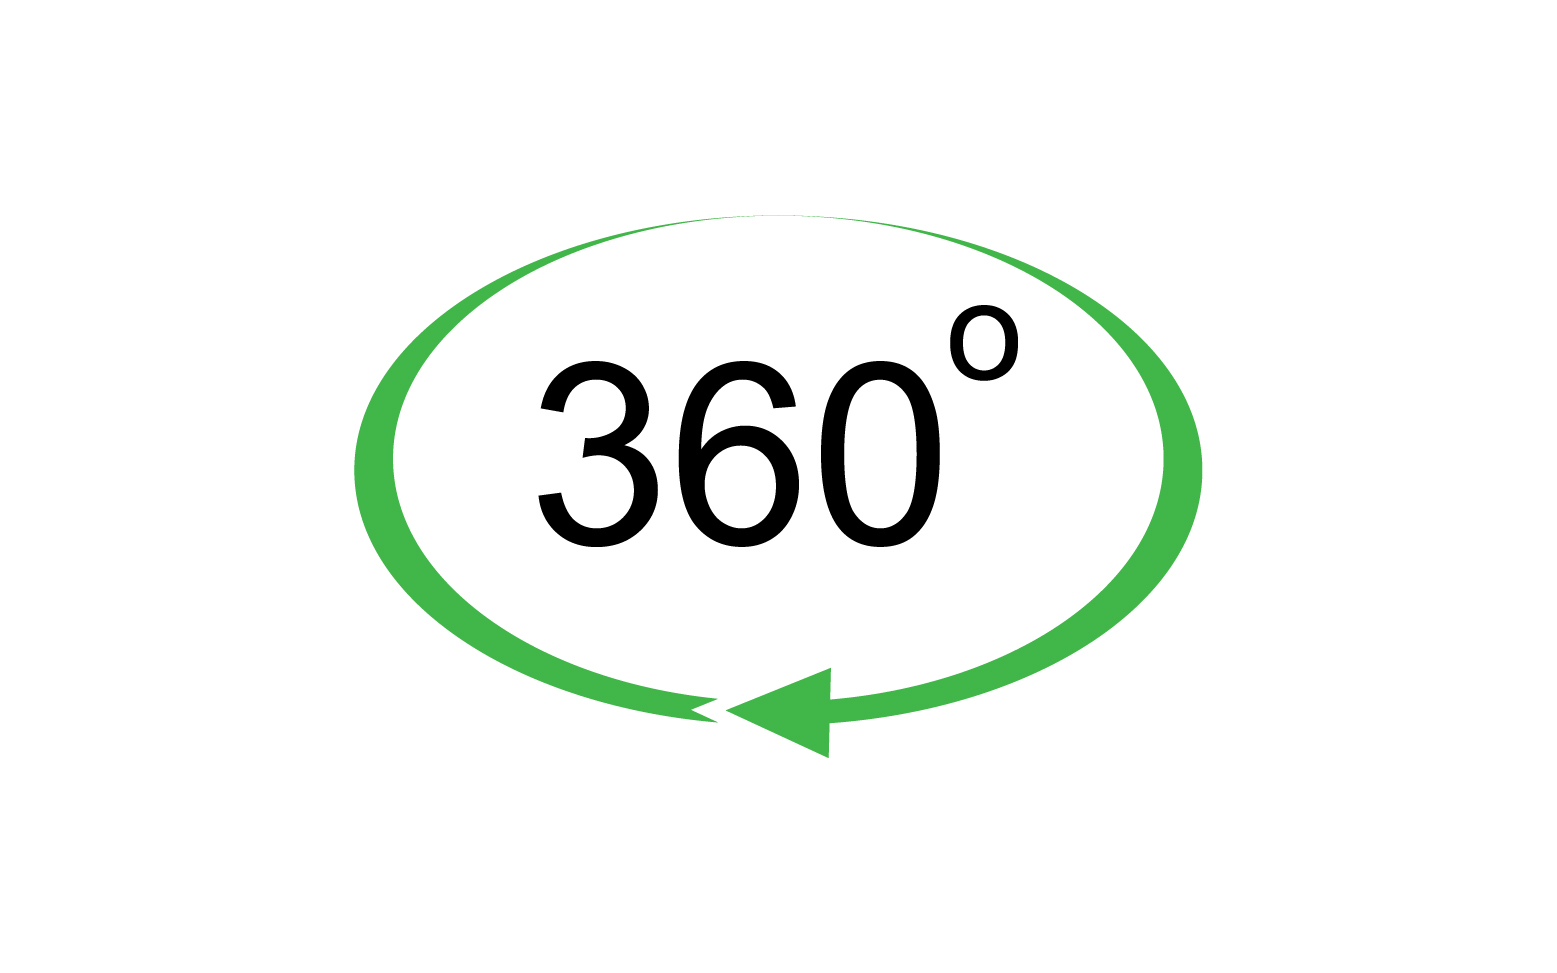 360 degree angle rotation icon symbol logo version v10